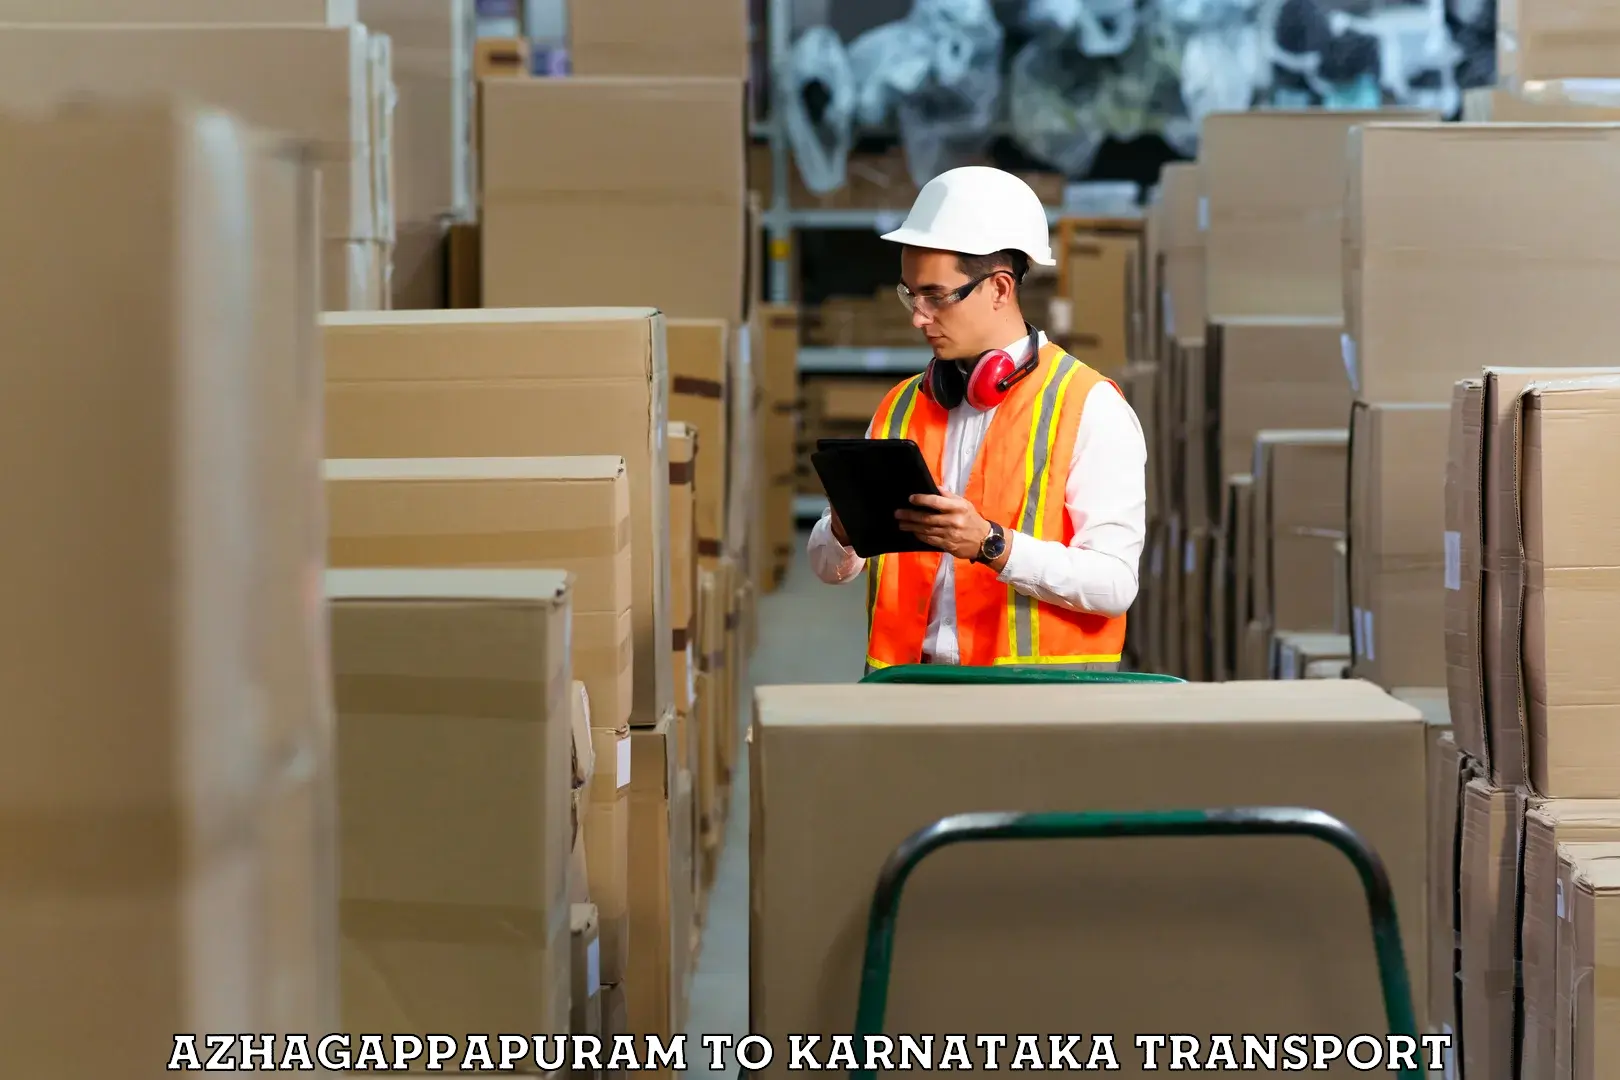 Shipping partner Azhagappapuram to Sringeri